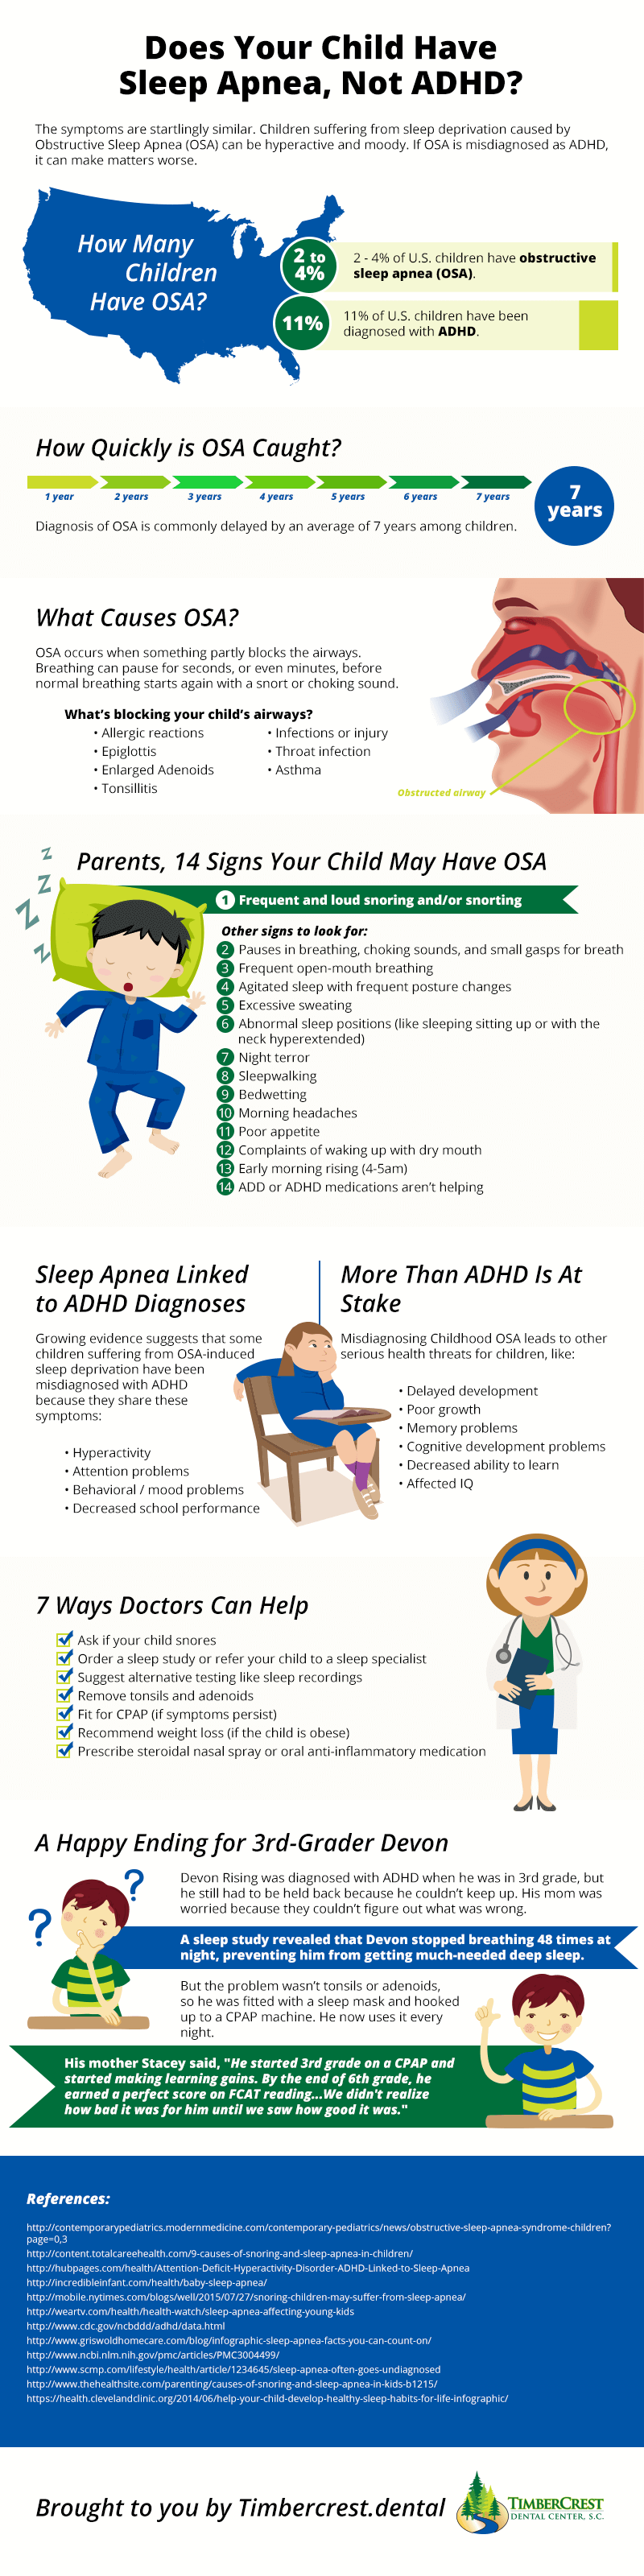 Child Sleep Apnea and ADHD Infographic